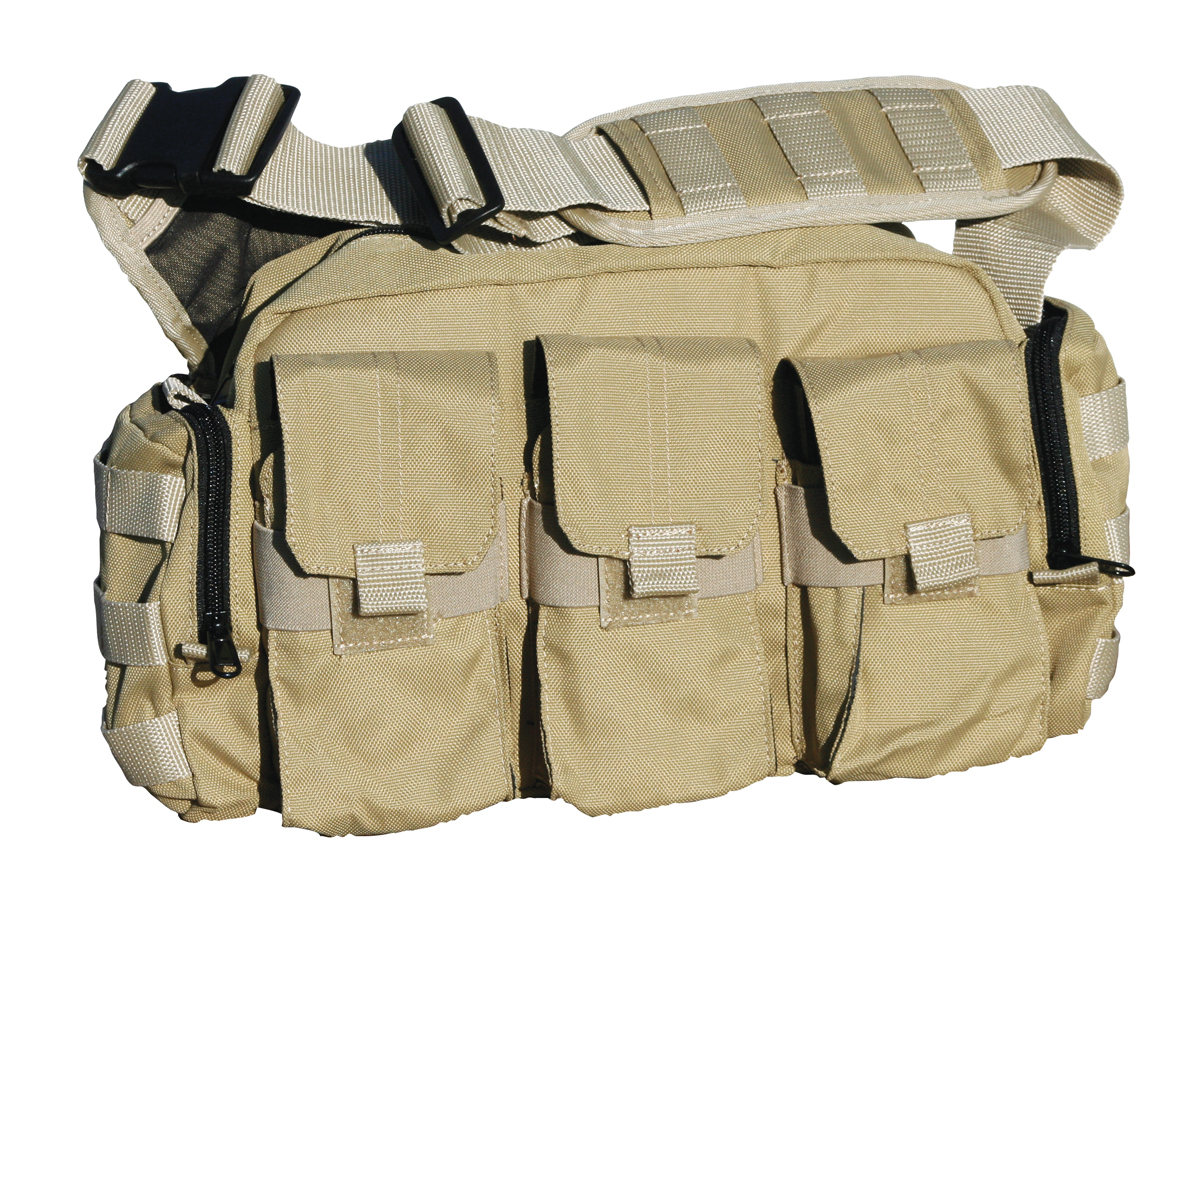 Shop Tactical Bags Now